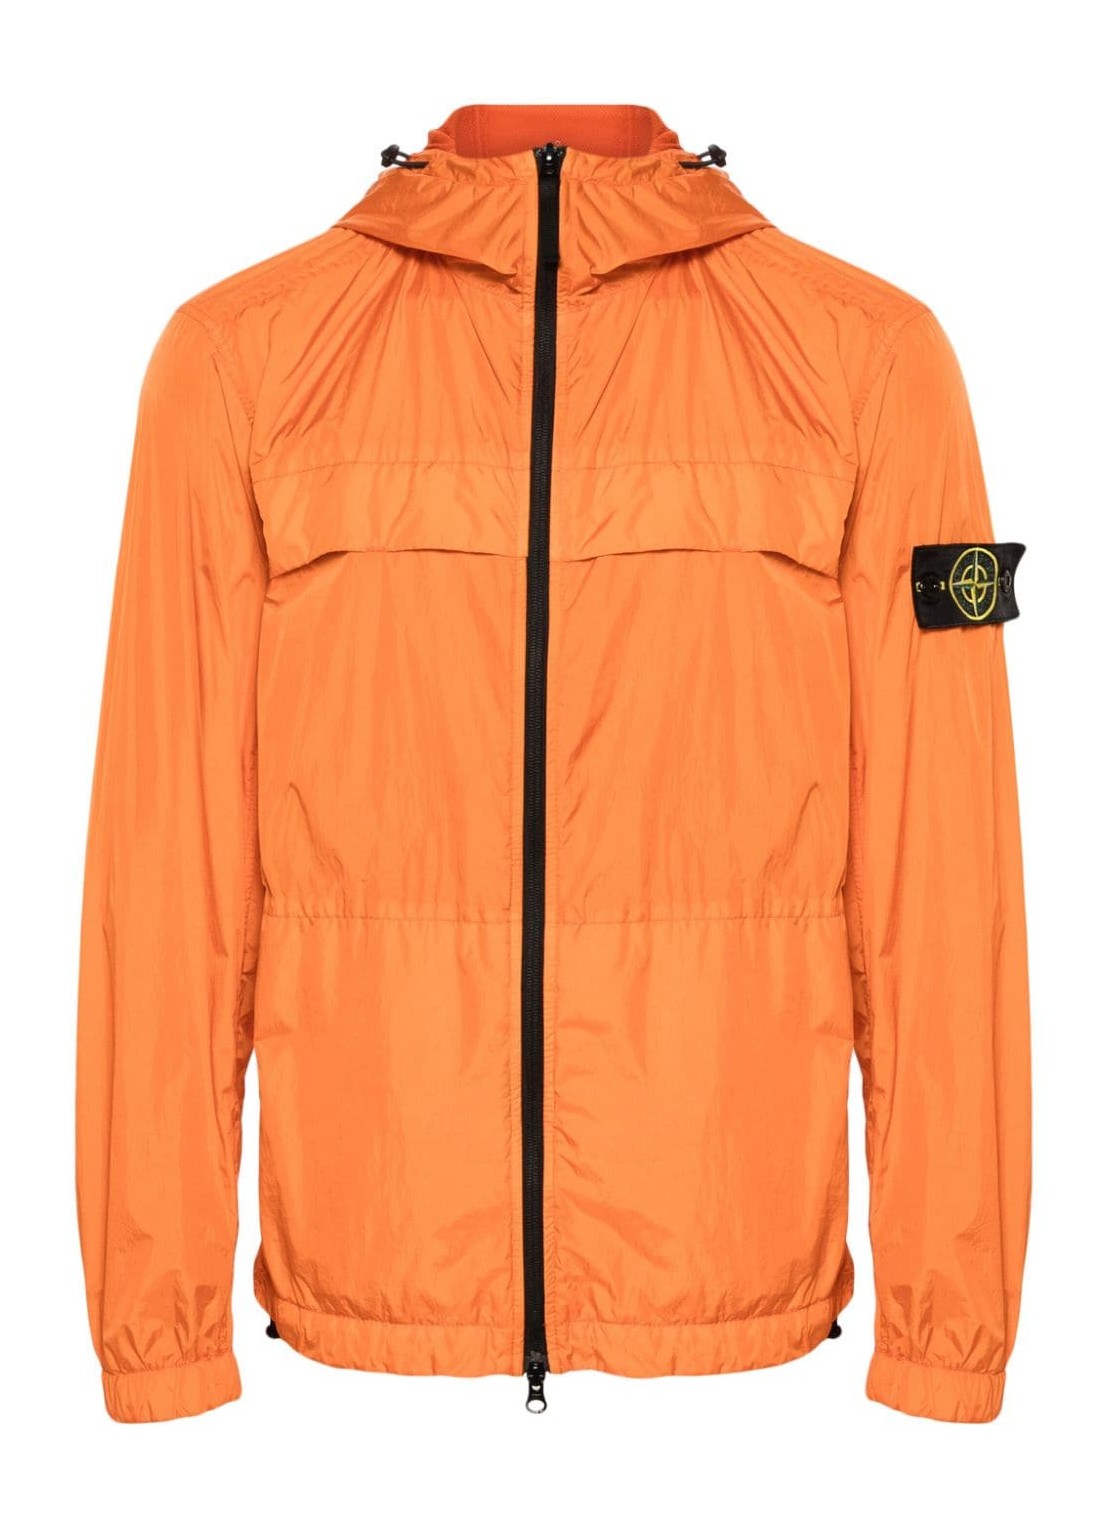 Outerwear stone island outerwear man jacket 801540922 v0032 talla XXL
 